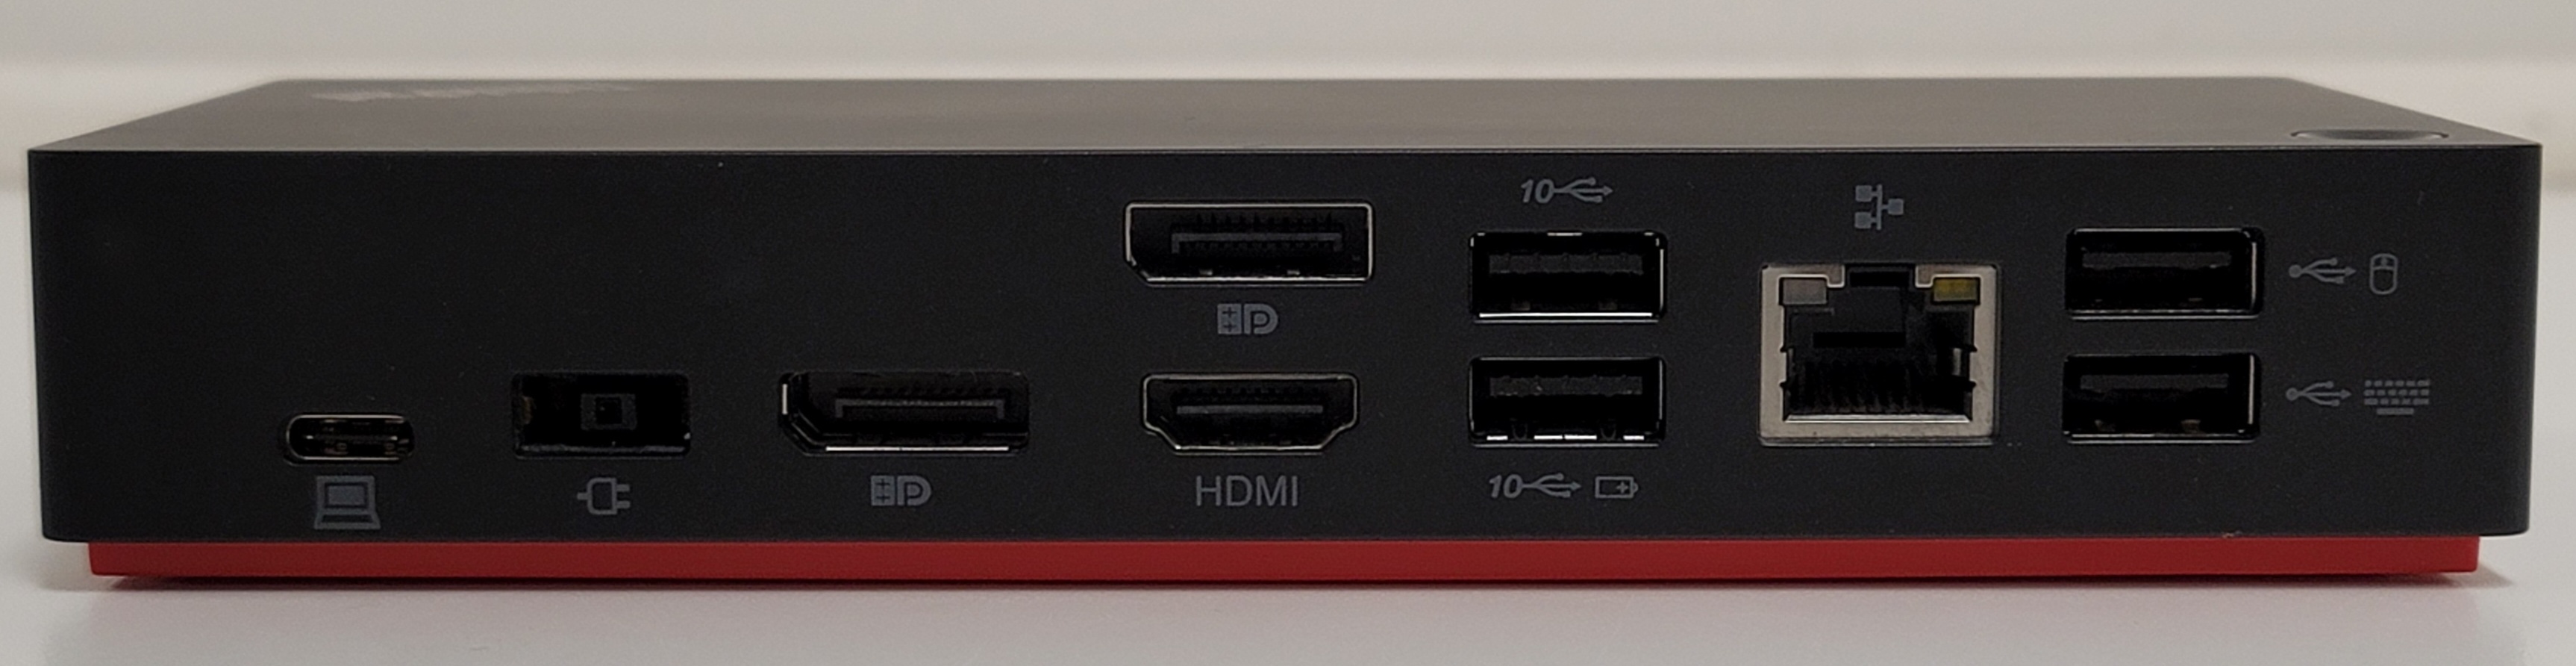 Banyan over undulate Lenovo ThinkPad USB-C Dock Gen 2 | Avenue Shop Swap & Sell